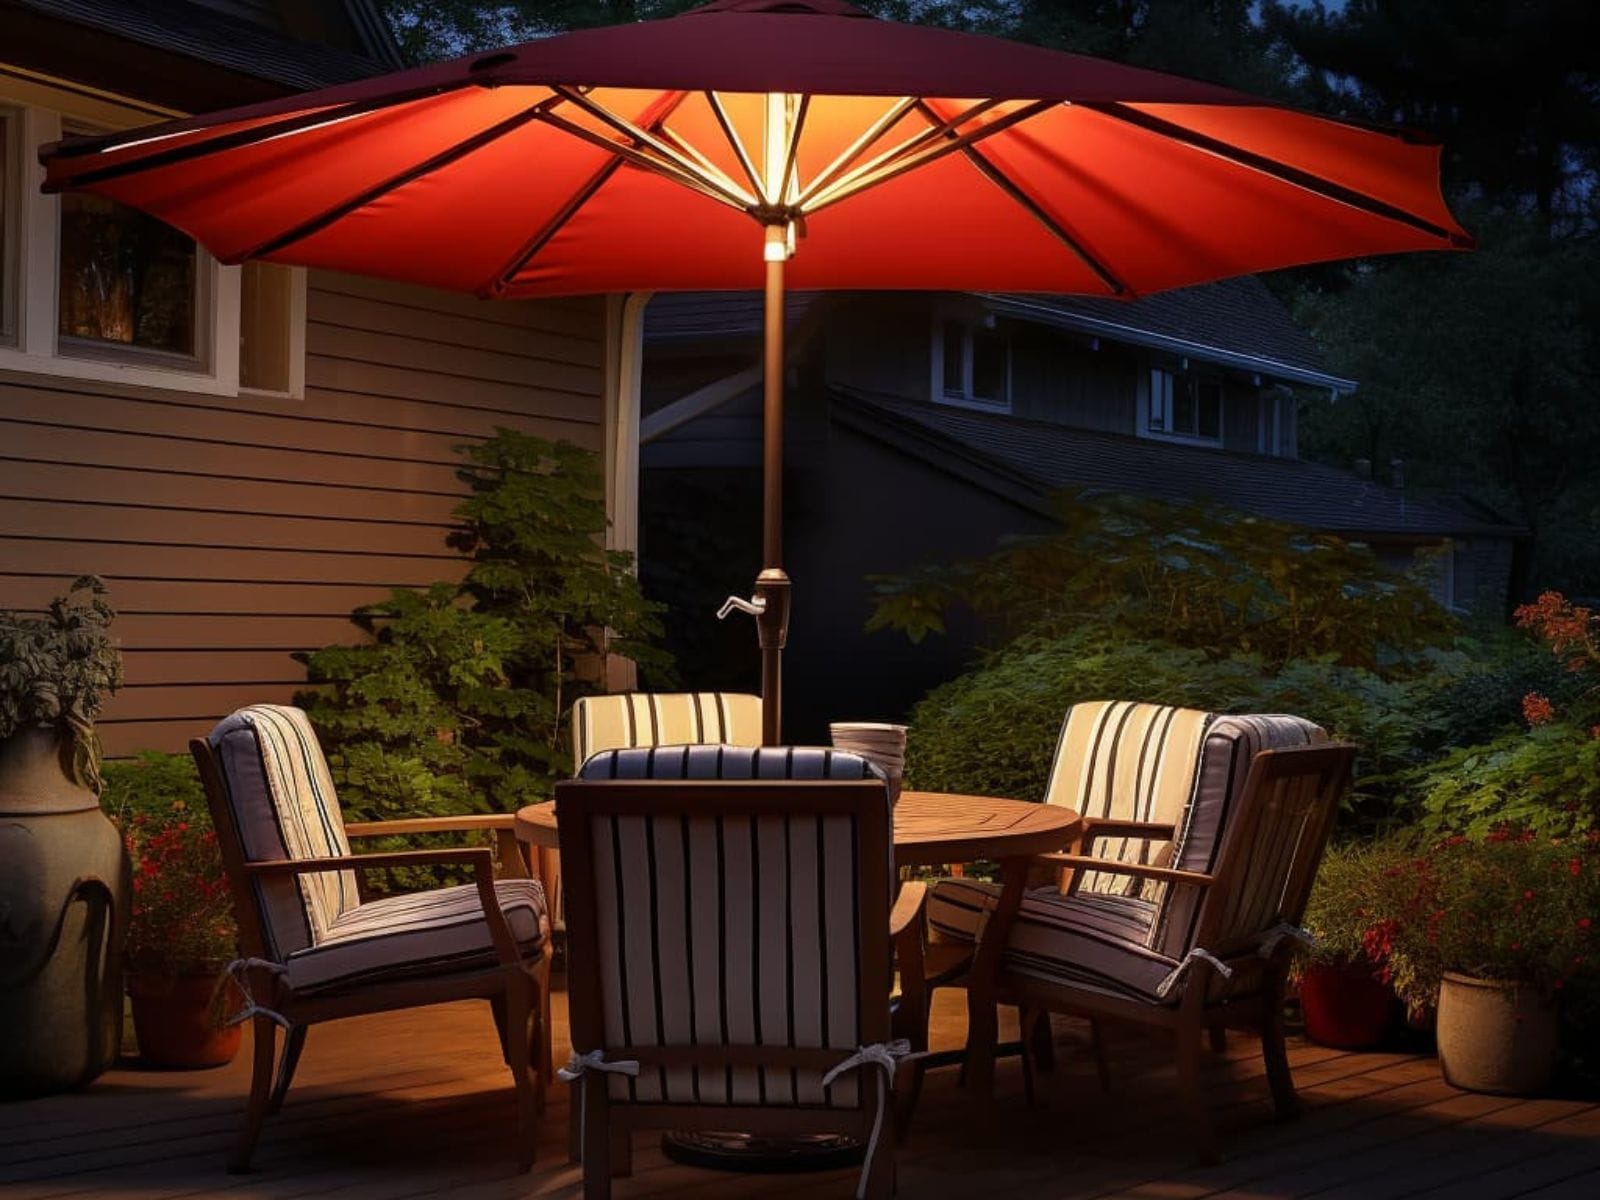 LED patio umbrella lights illuminating an outdoor seating area